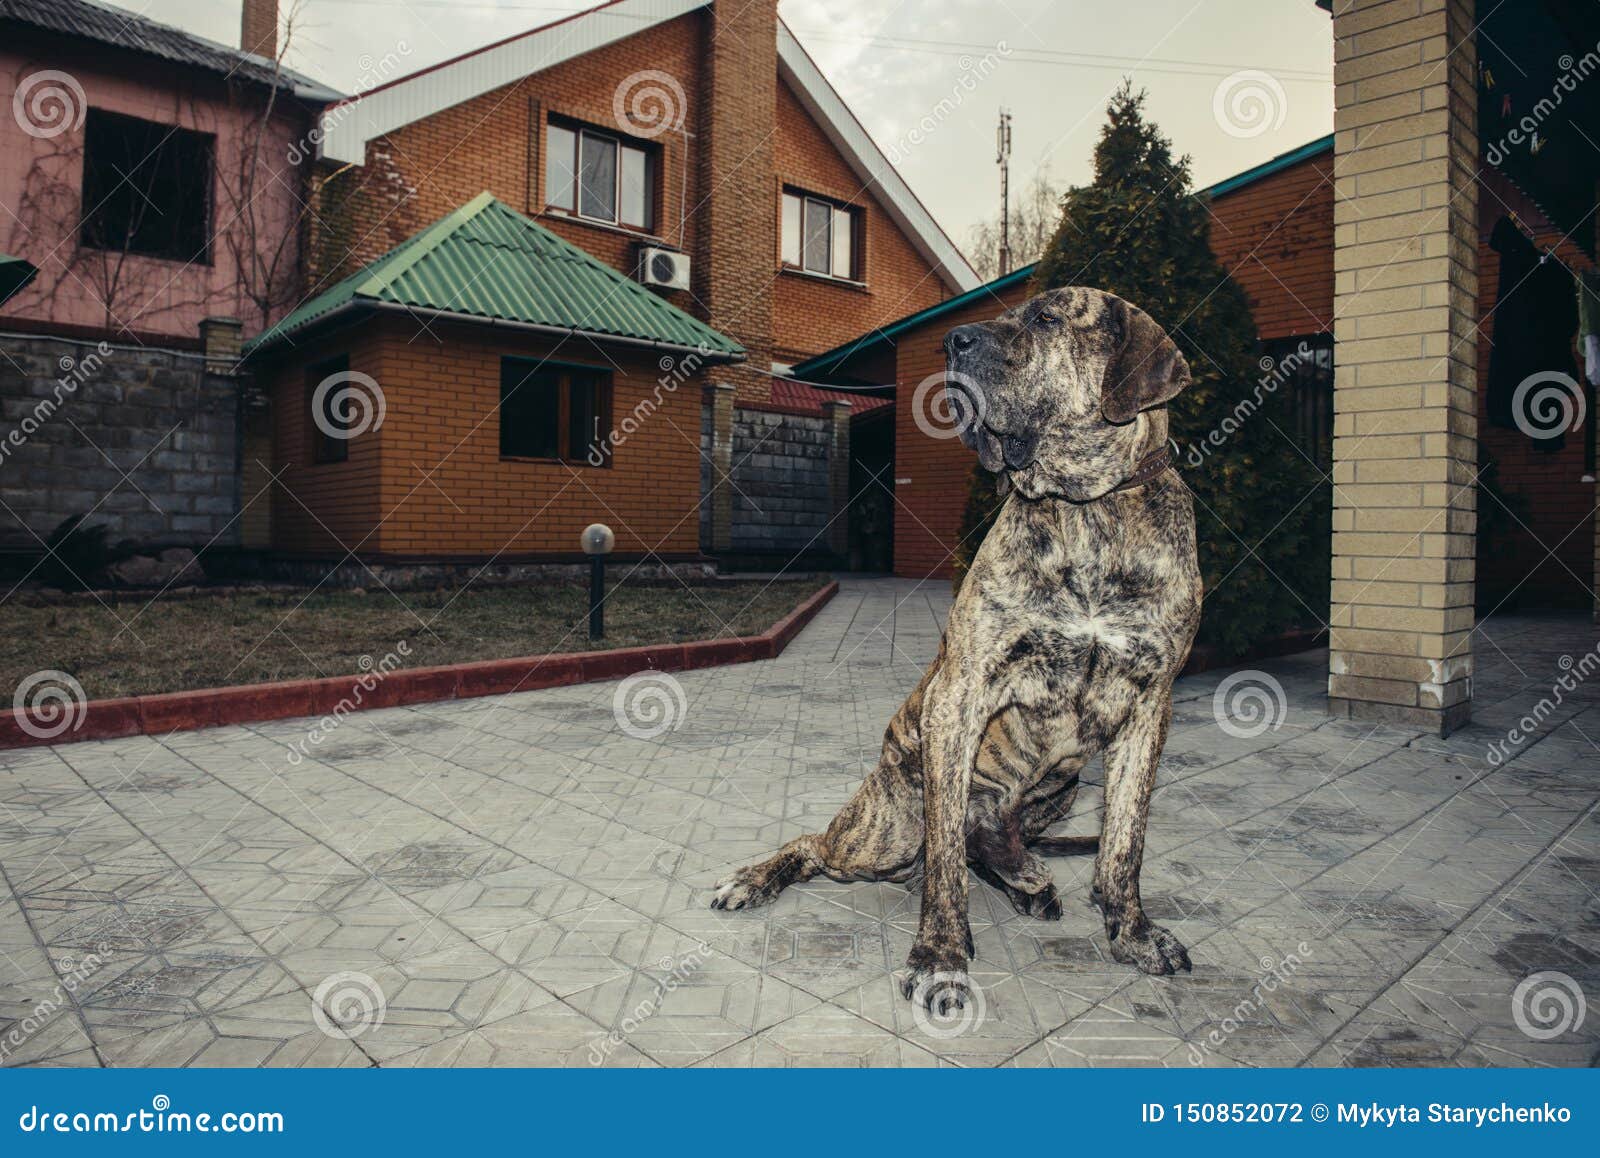 big brazilian fila dog protecting the property sitting in the yard.